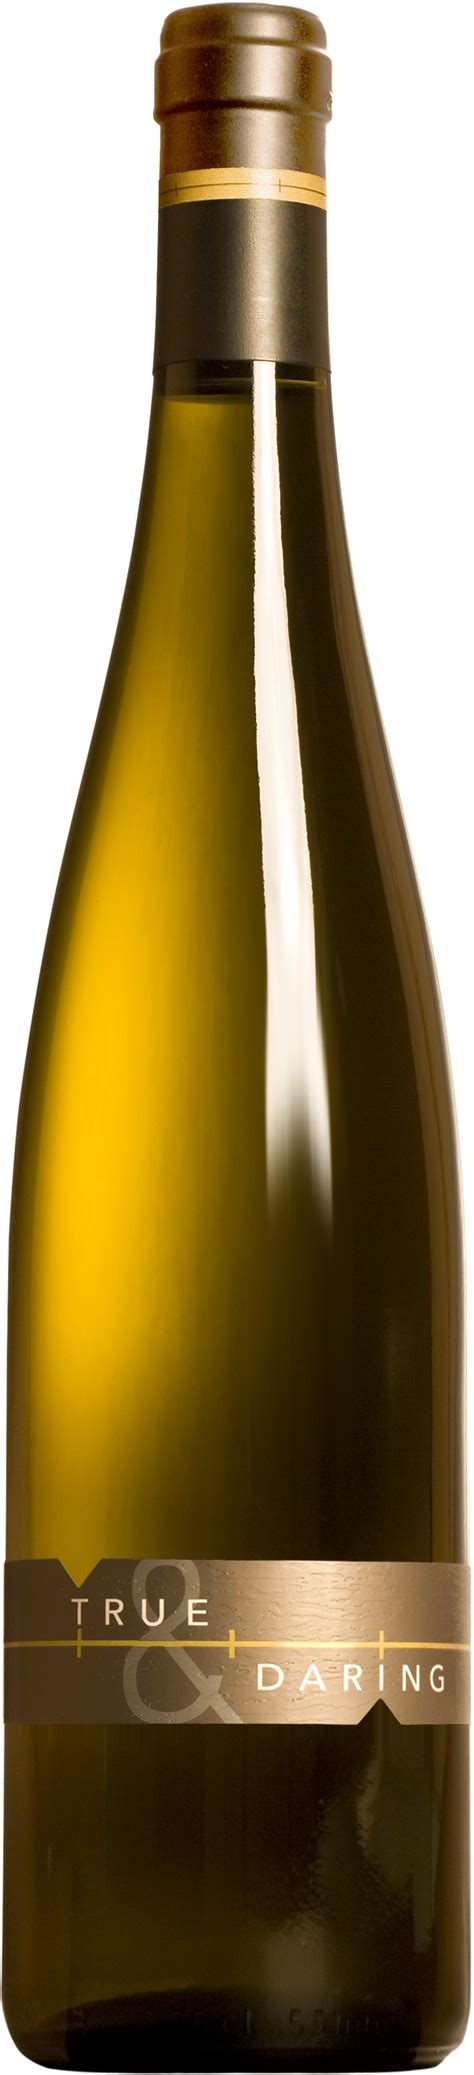 Wine Bottle Png Image Transparent Image Download Size 775x3394px